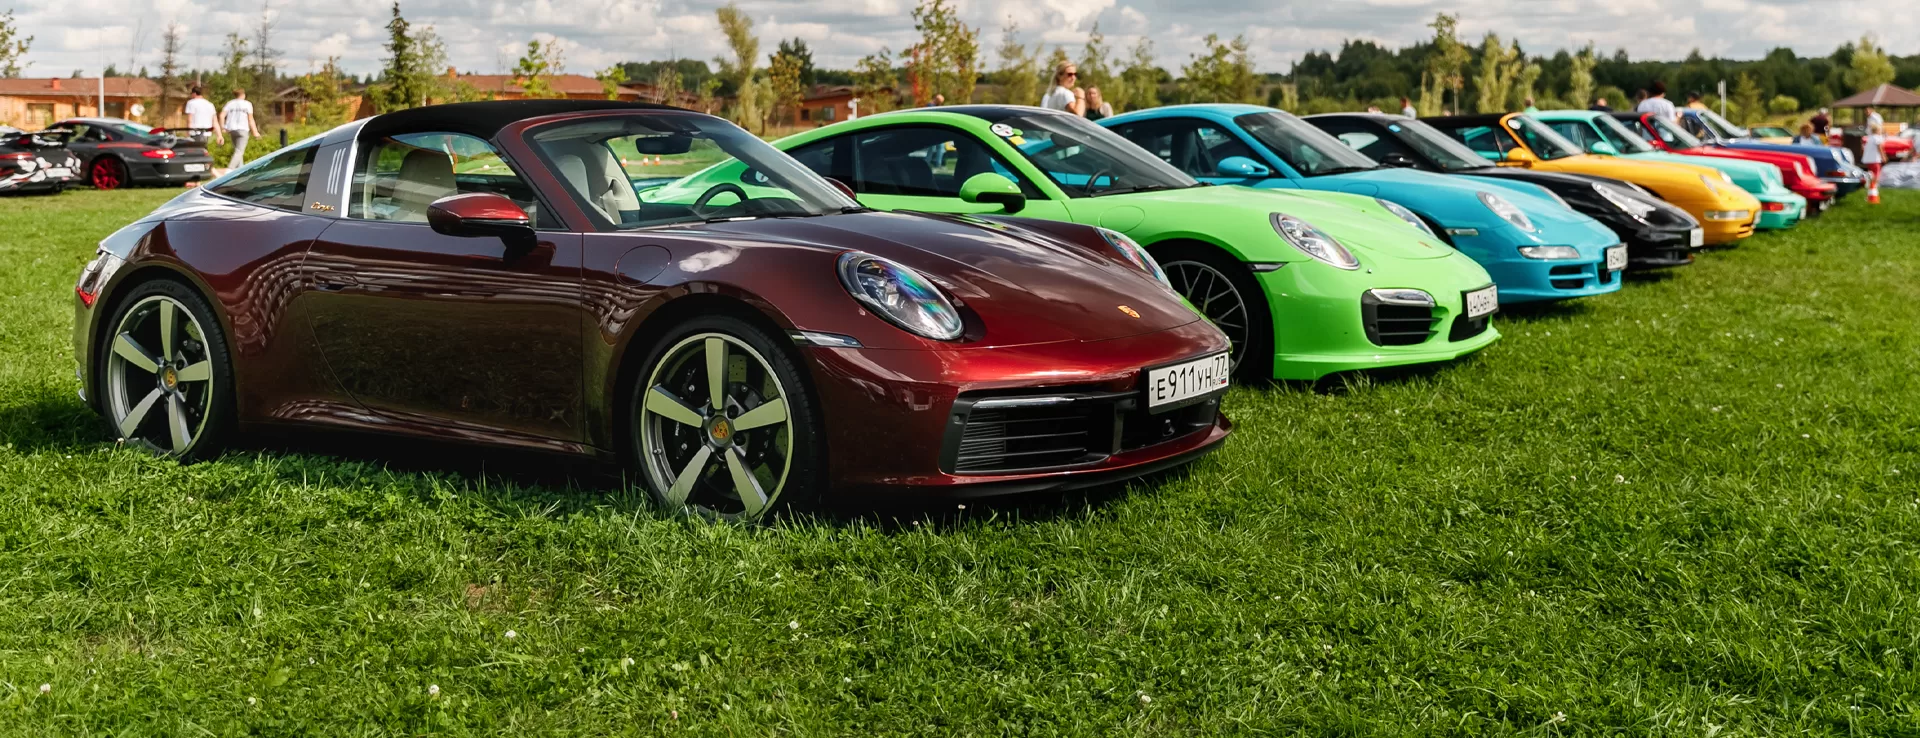 Porsche Club Moscow Festival 2021 — праздник спорткаров для всей семьи!